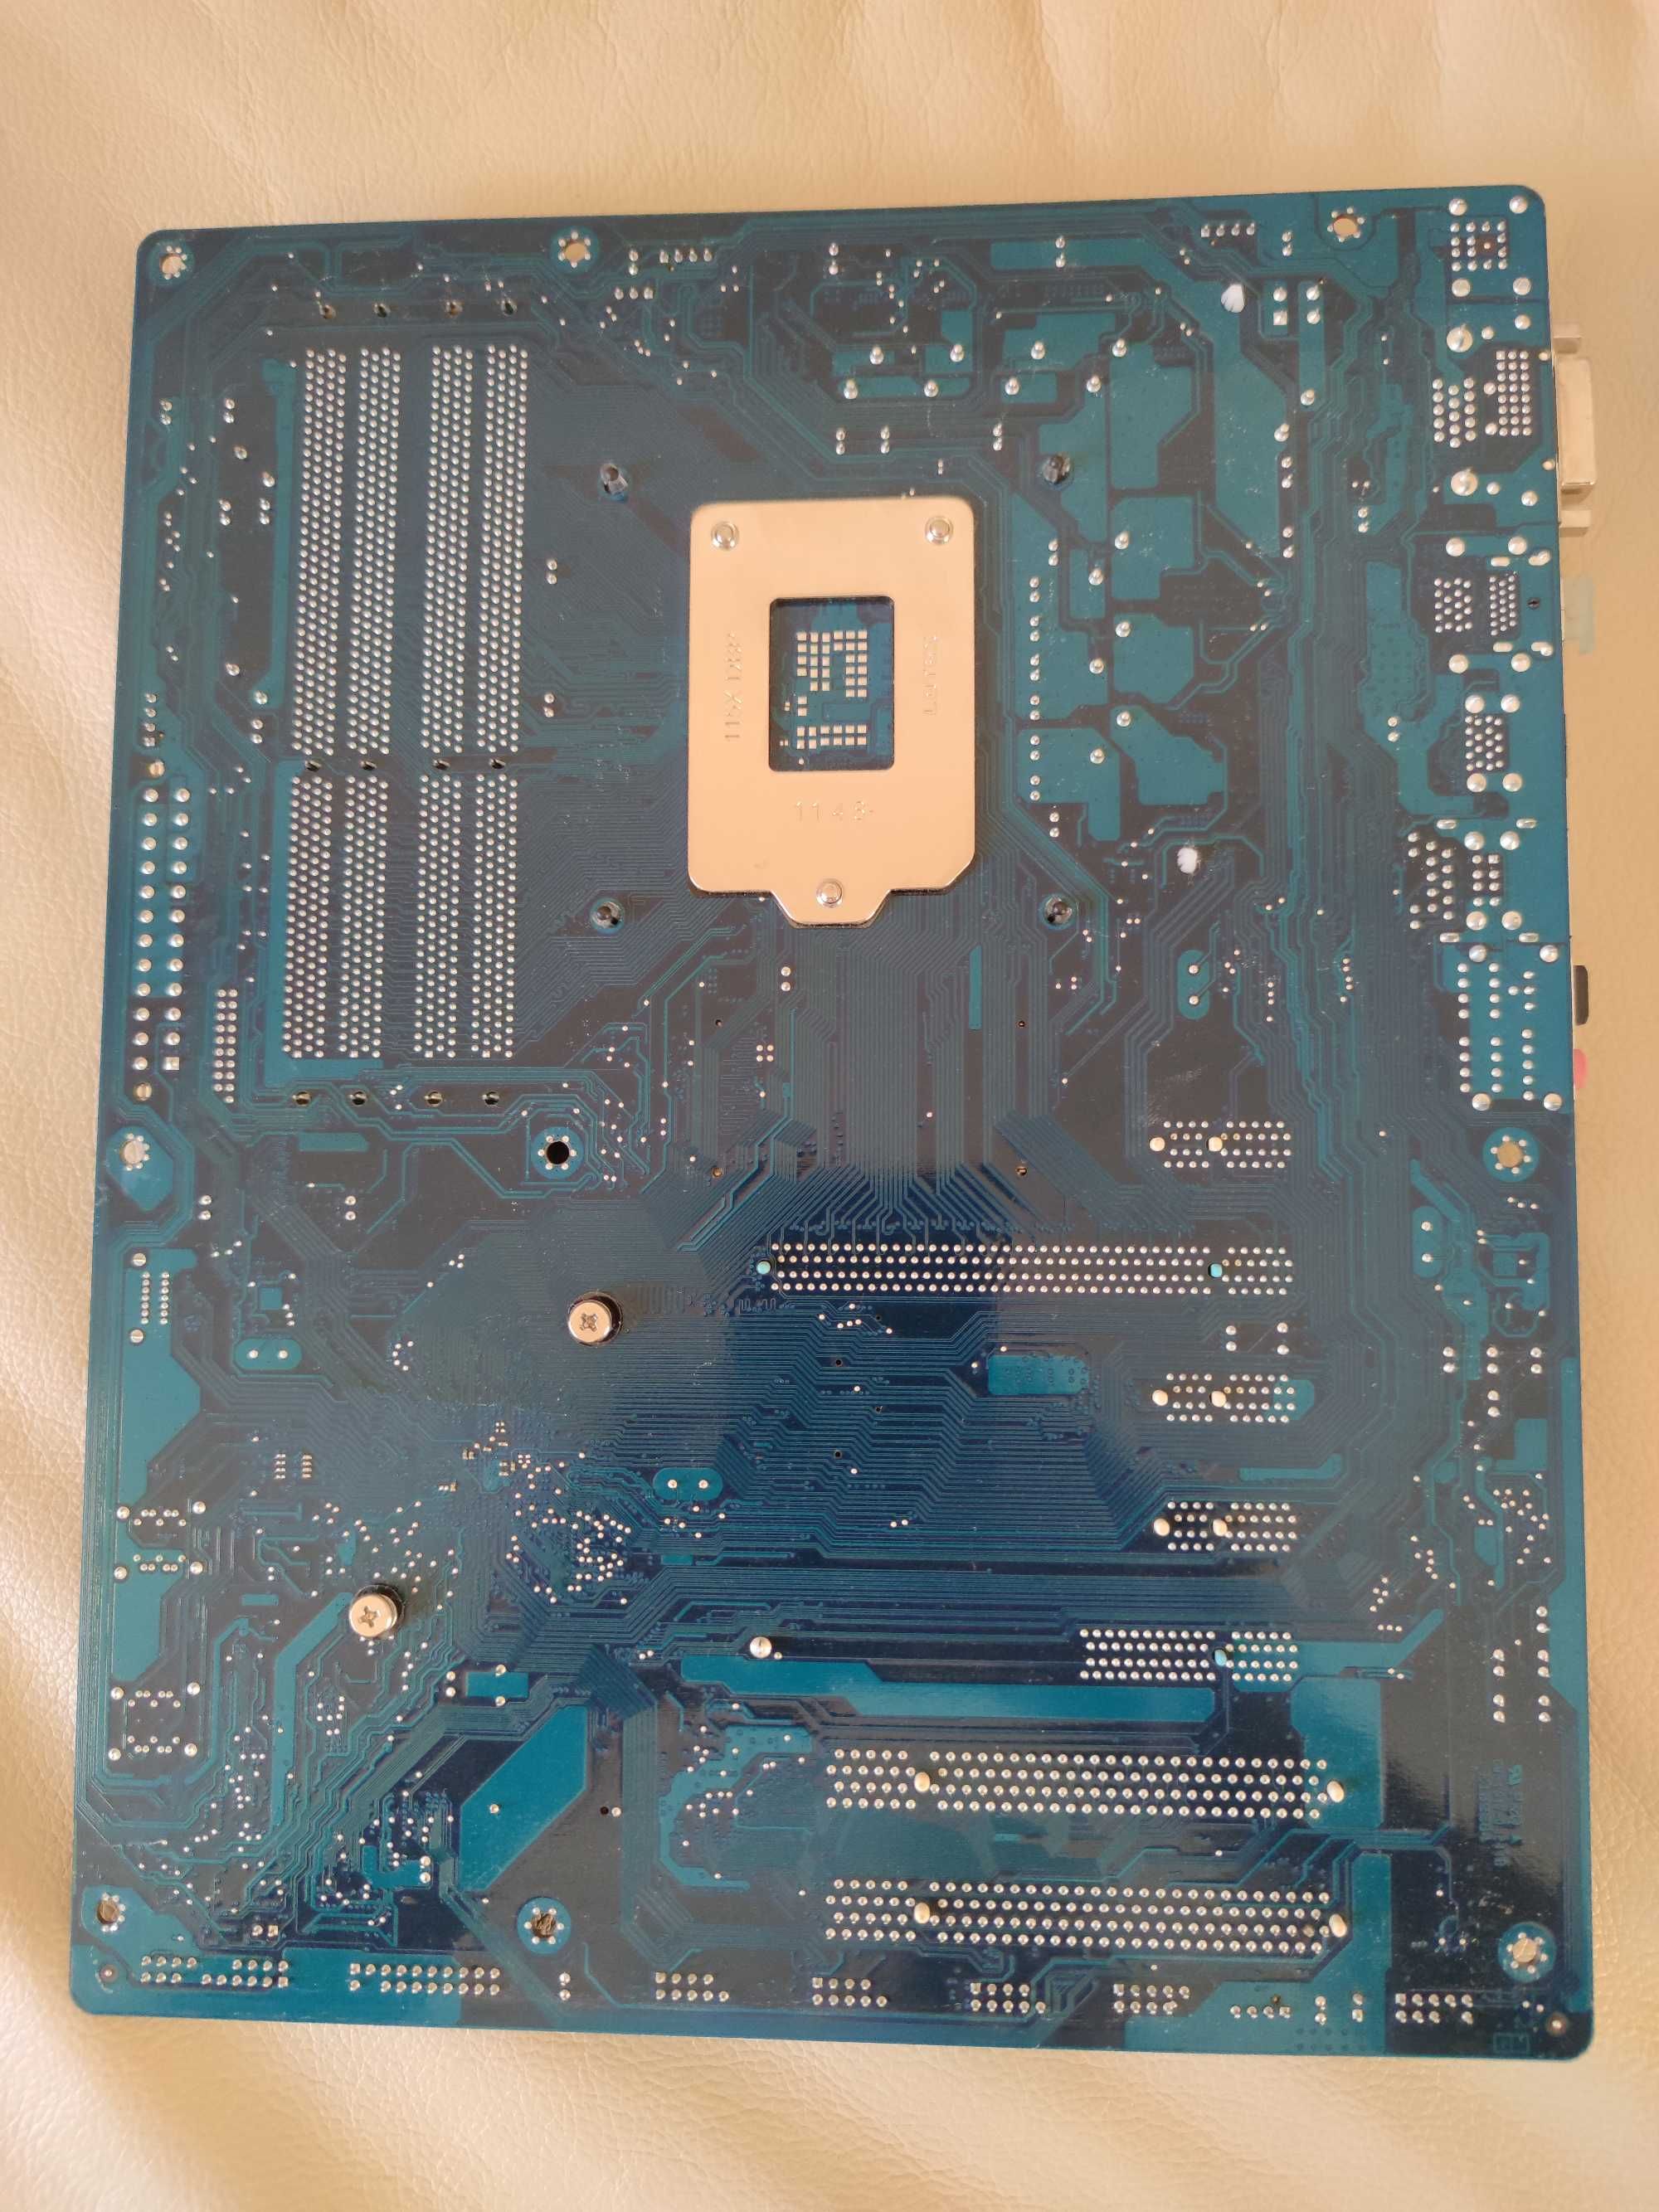 PC Конфигурация Intel i7-2600k + Gigabyte GA-Z77-D3H + 24Gb RAM